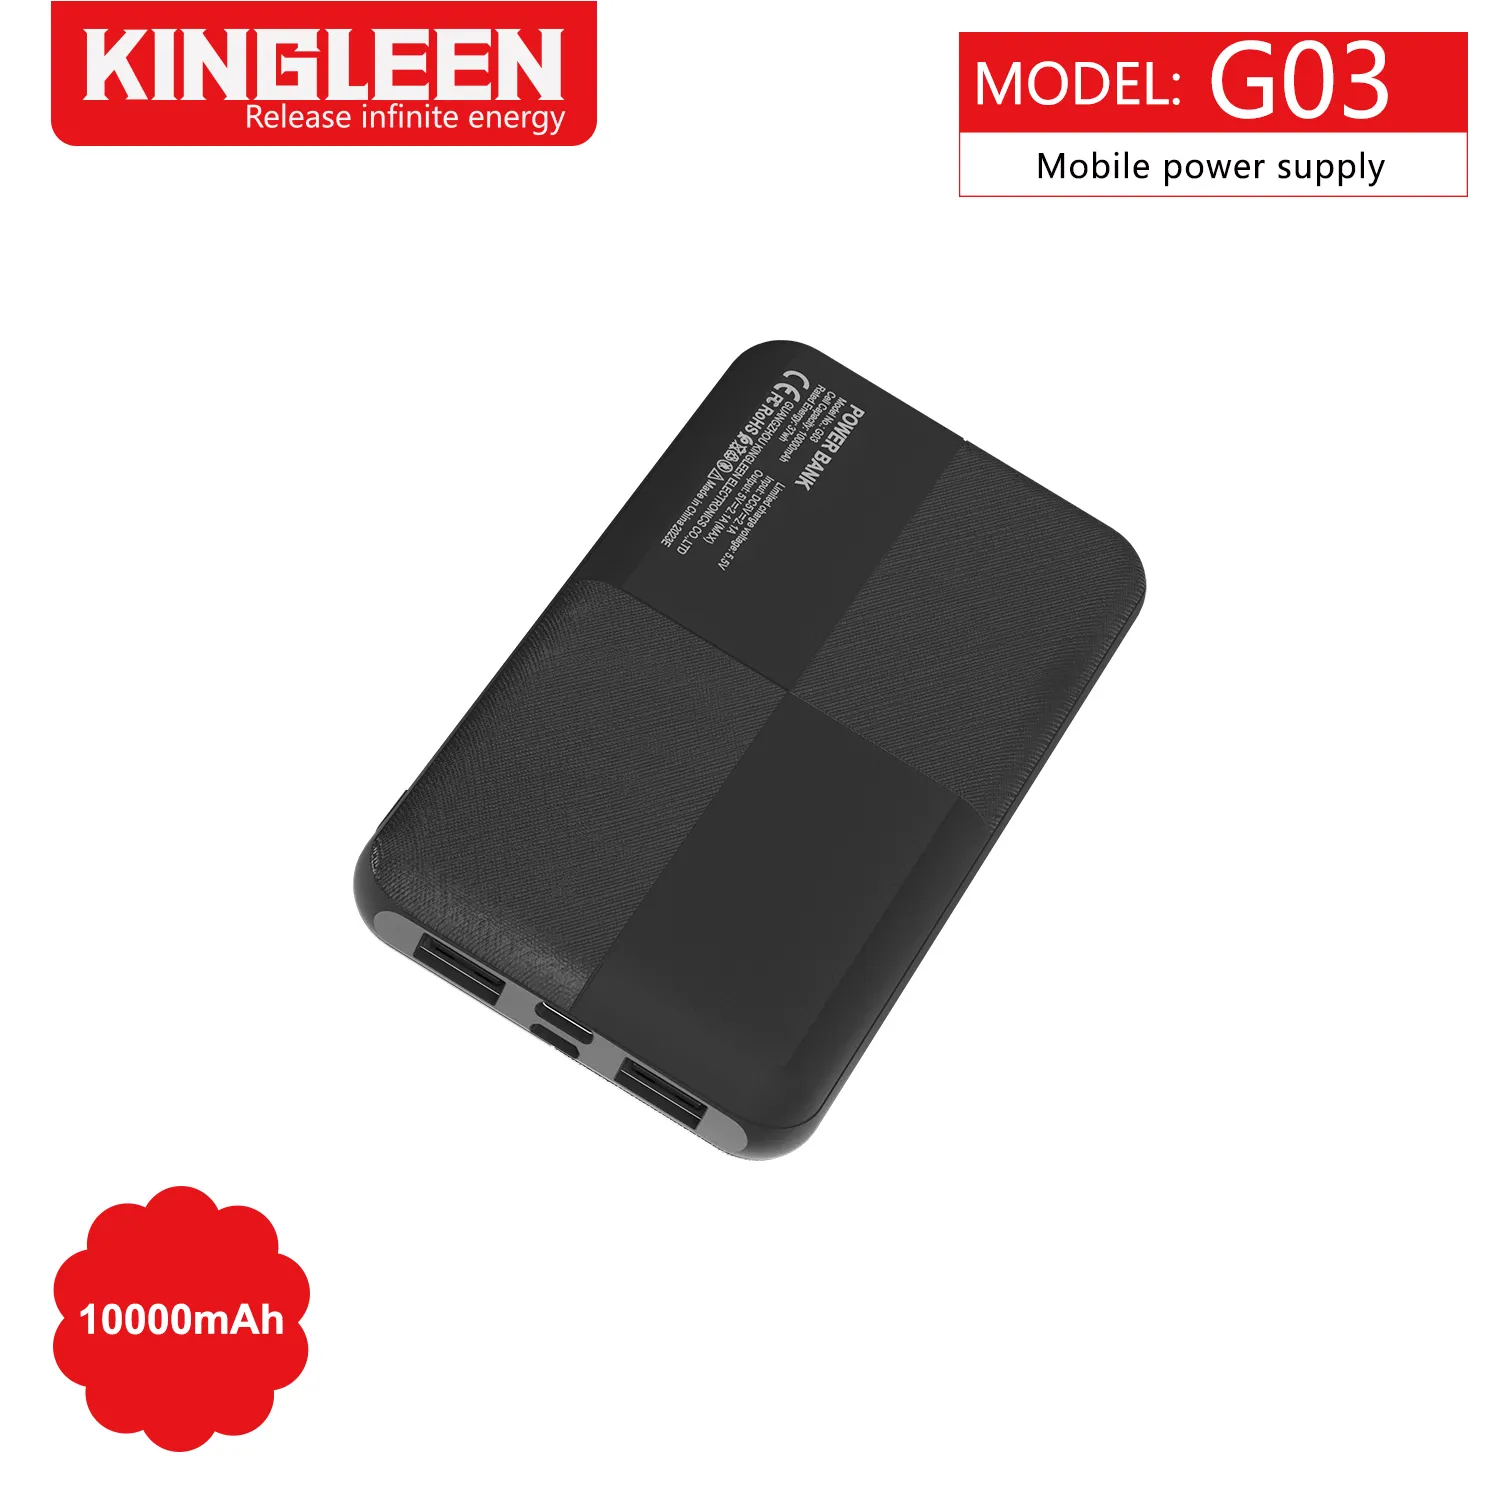 KINGLEEN G03 Power Bank 10000 mah terlaris, Powerbank pengisi daya portabel 10000 Mah, baterai eksternal Led untuk ponsel